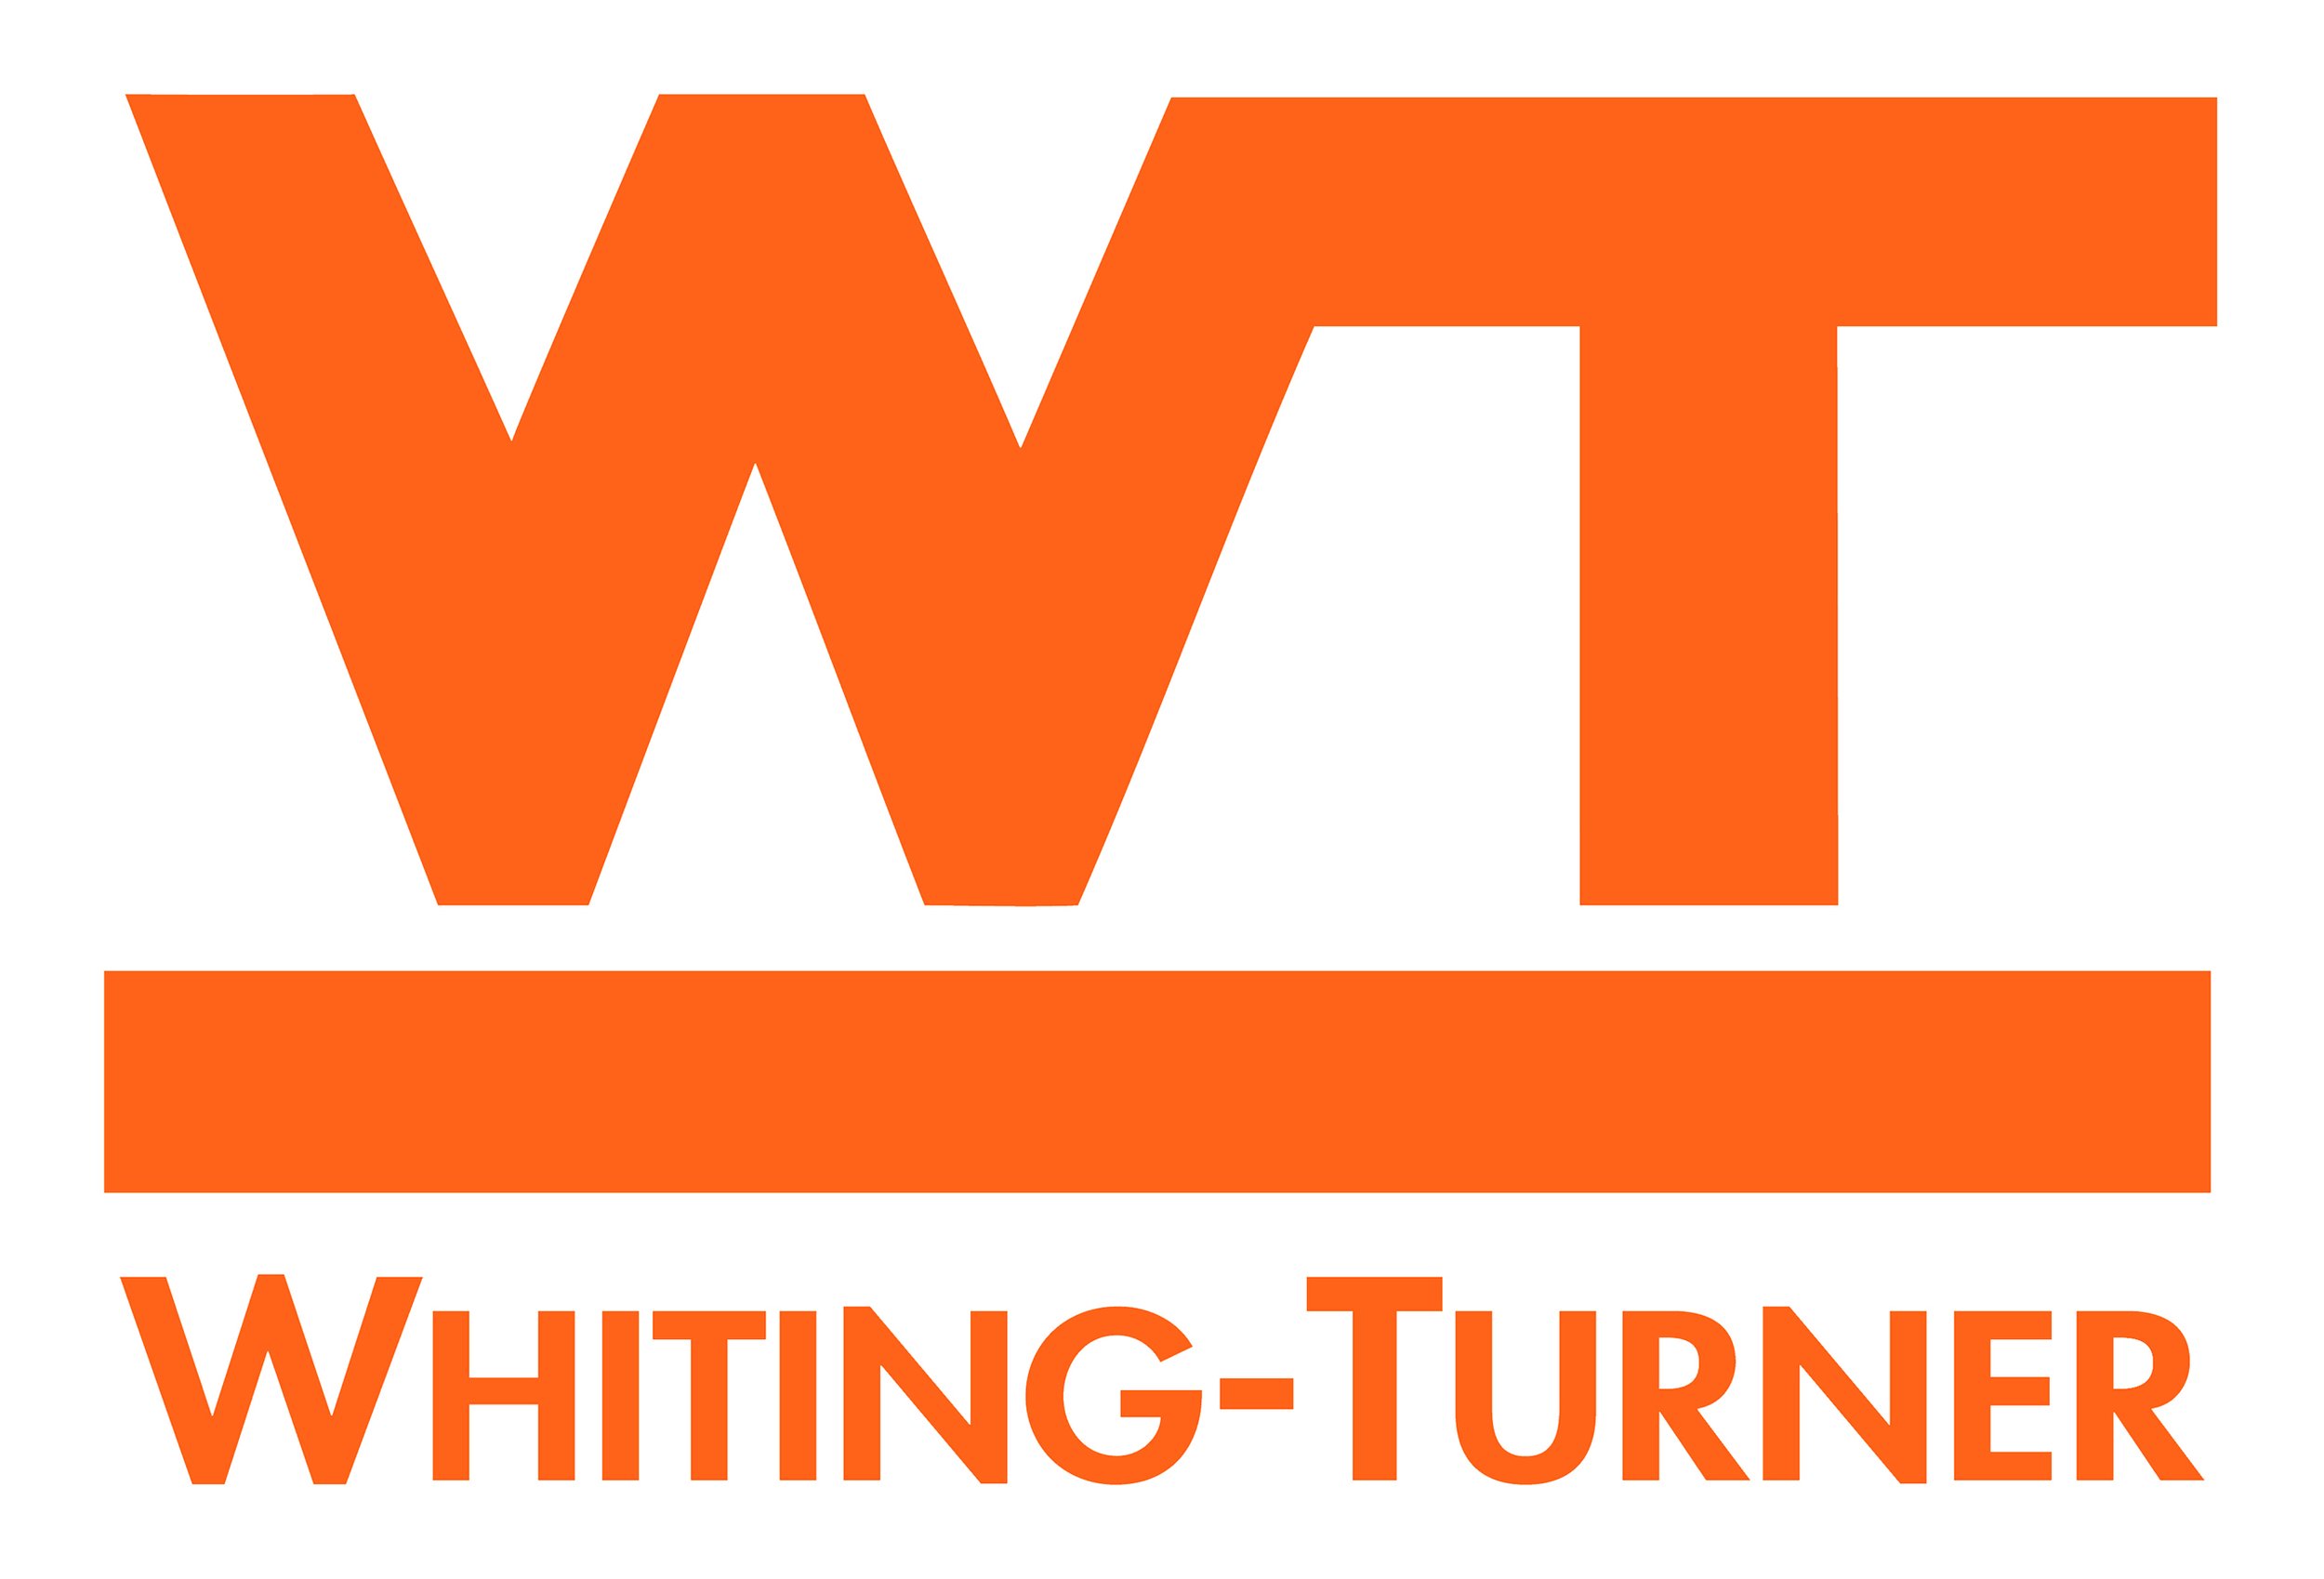 WhitingTurner.jpg